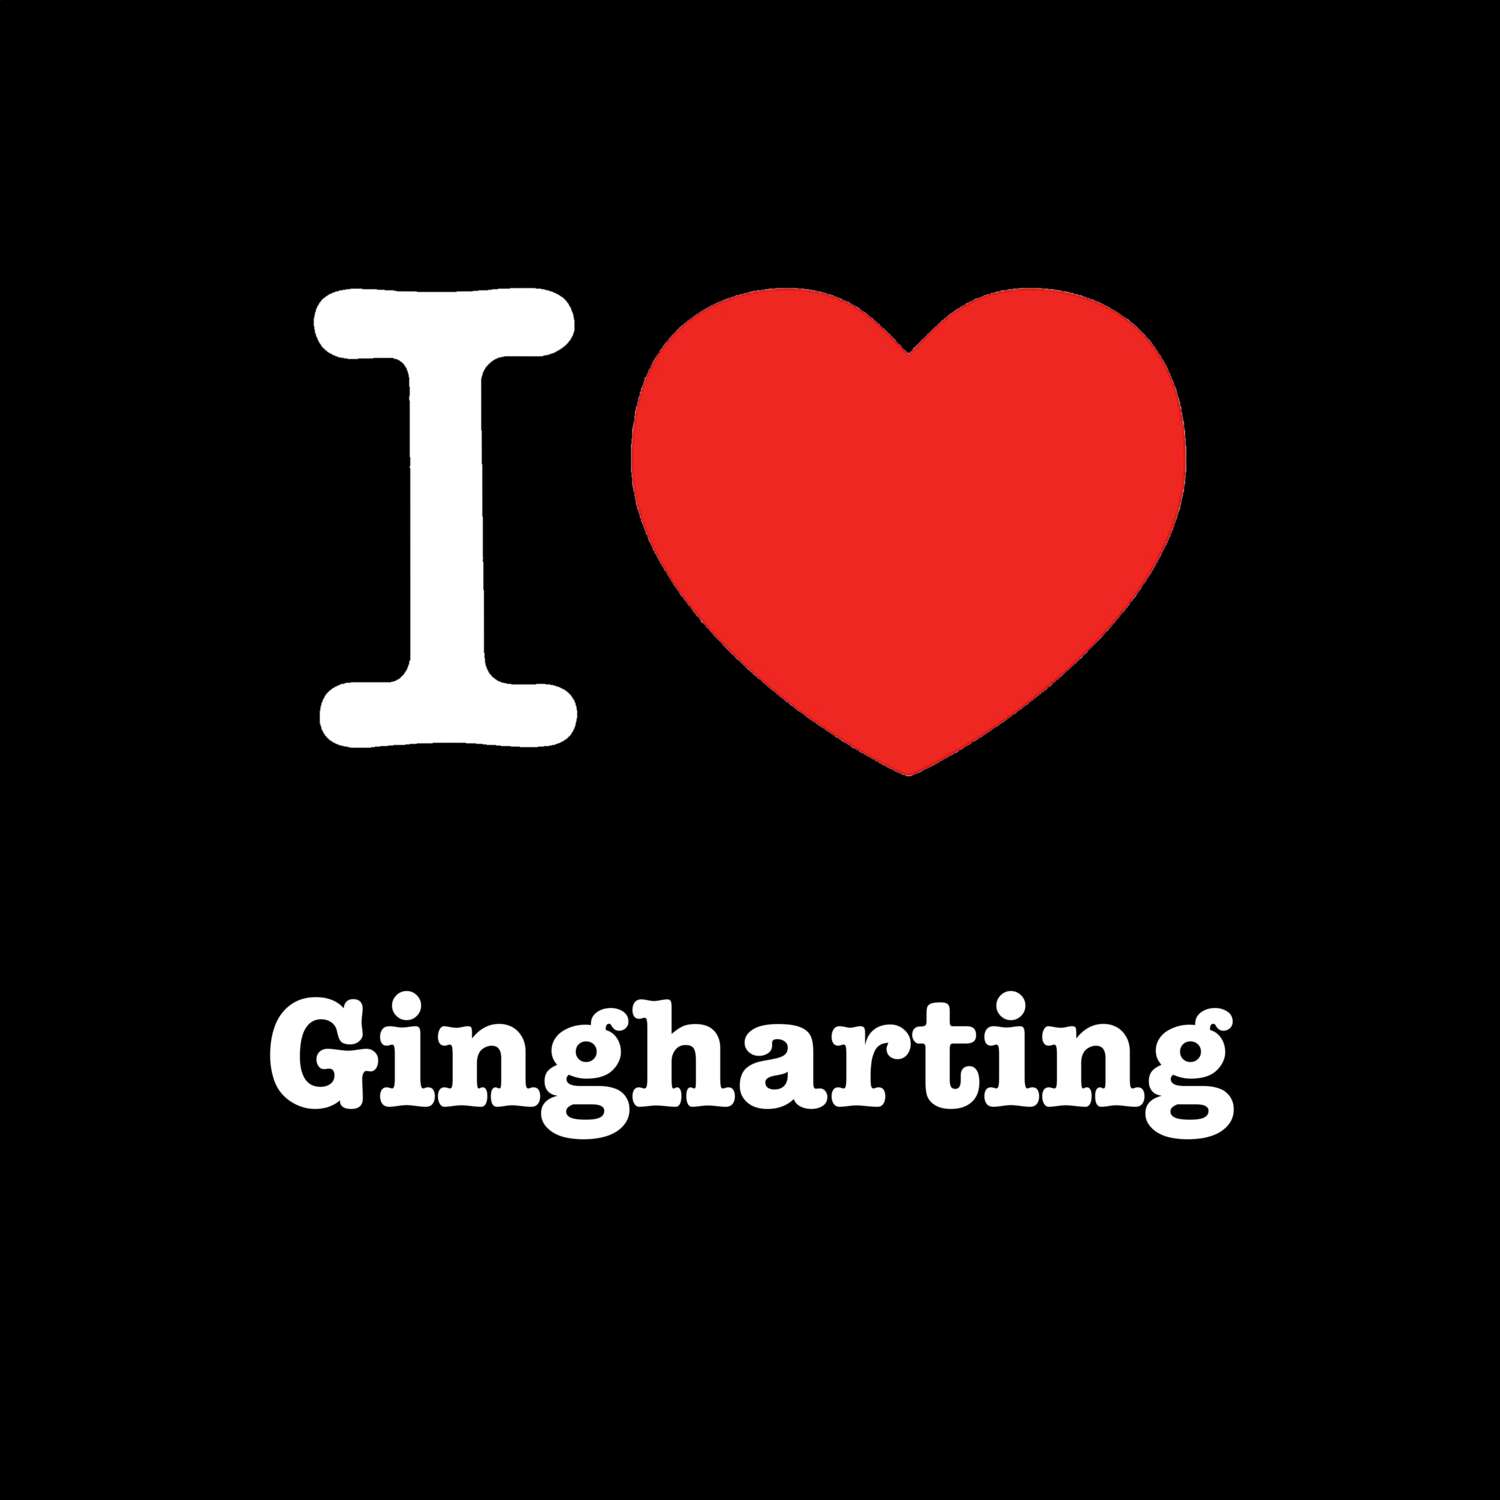 Gingharting T-Shirt »I love«